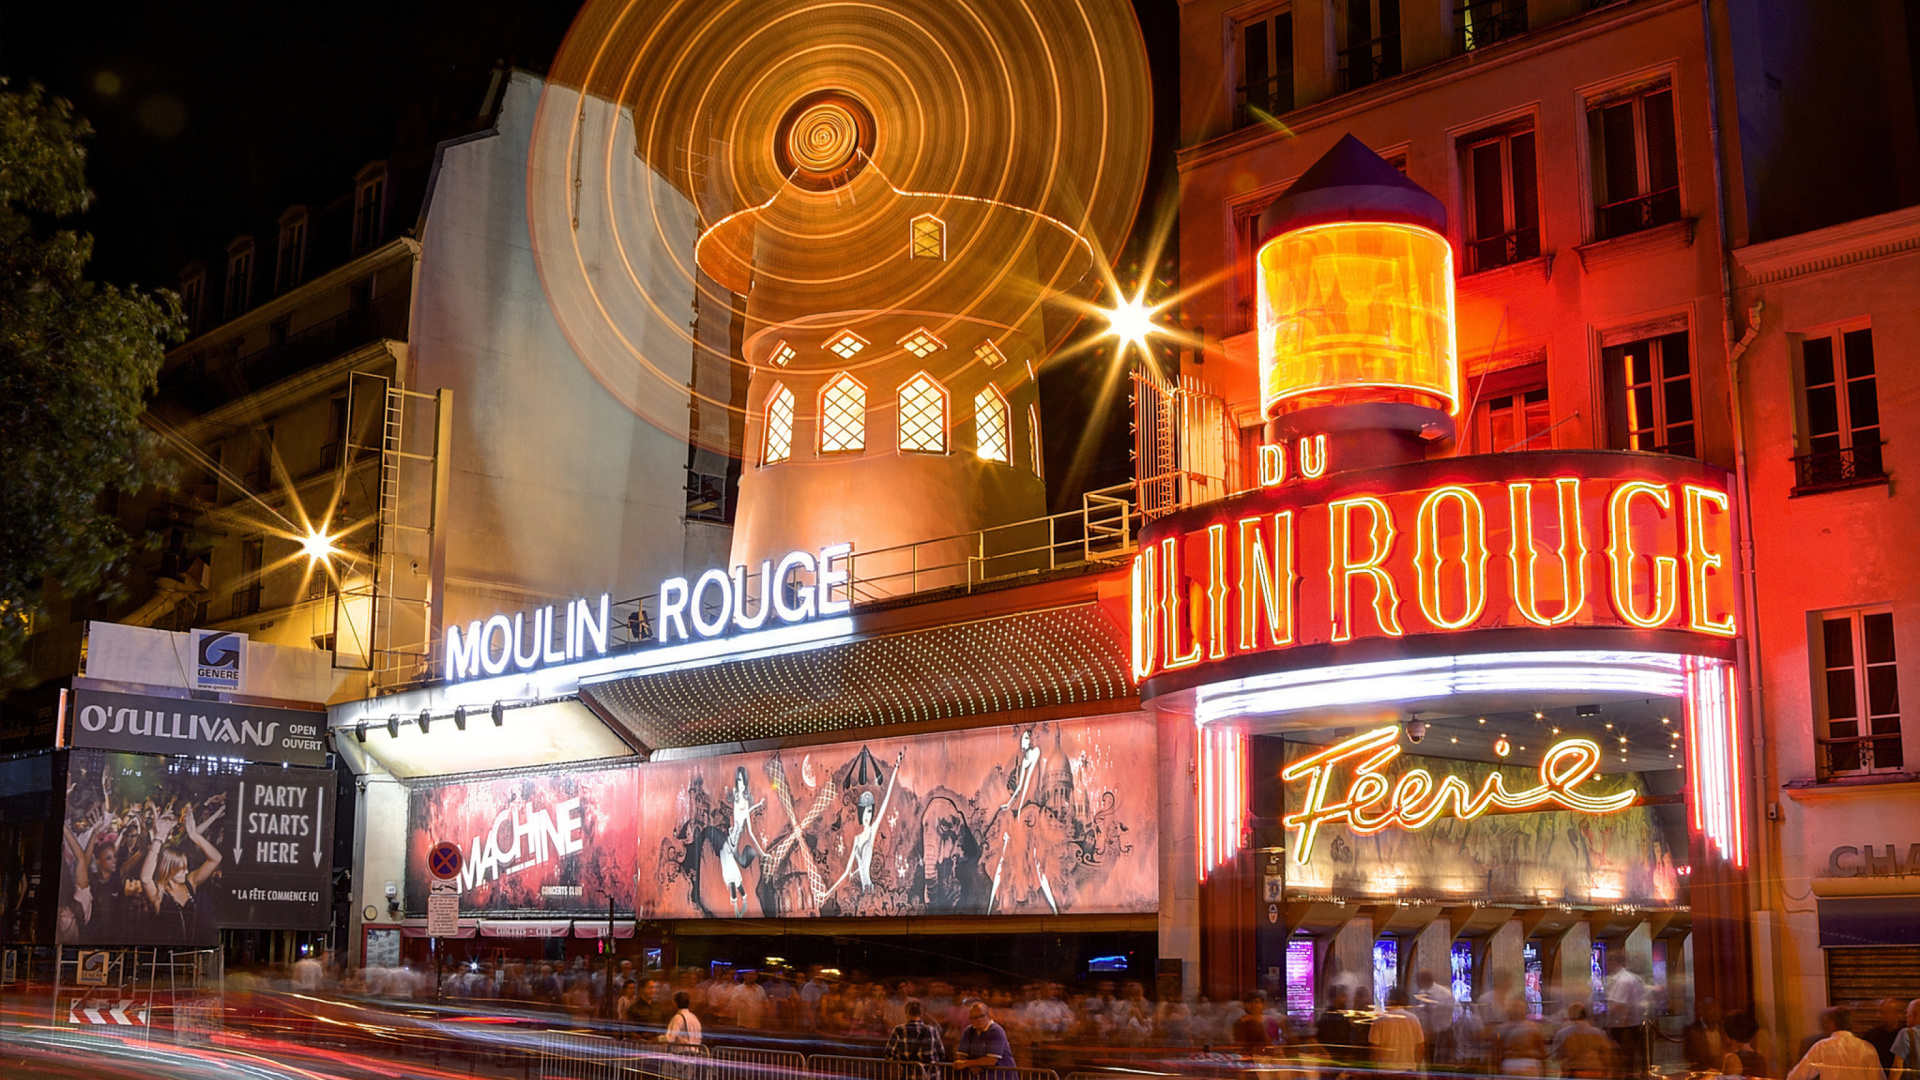 Moulin Rouge cabaret in Paris wallpaper 1920x1080